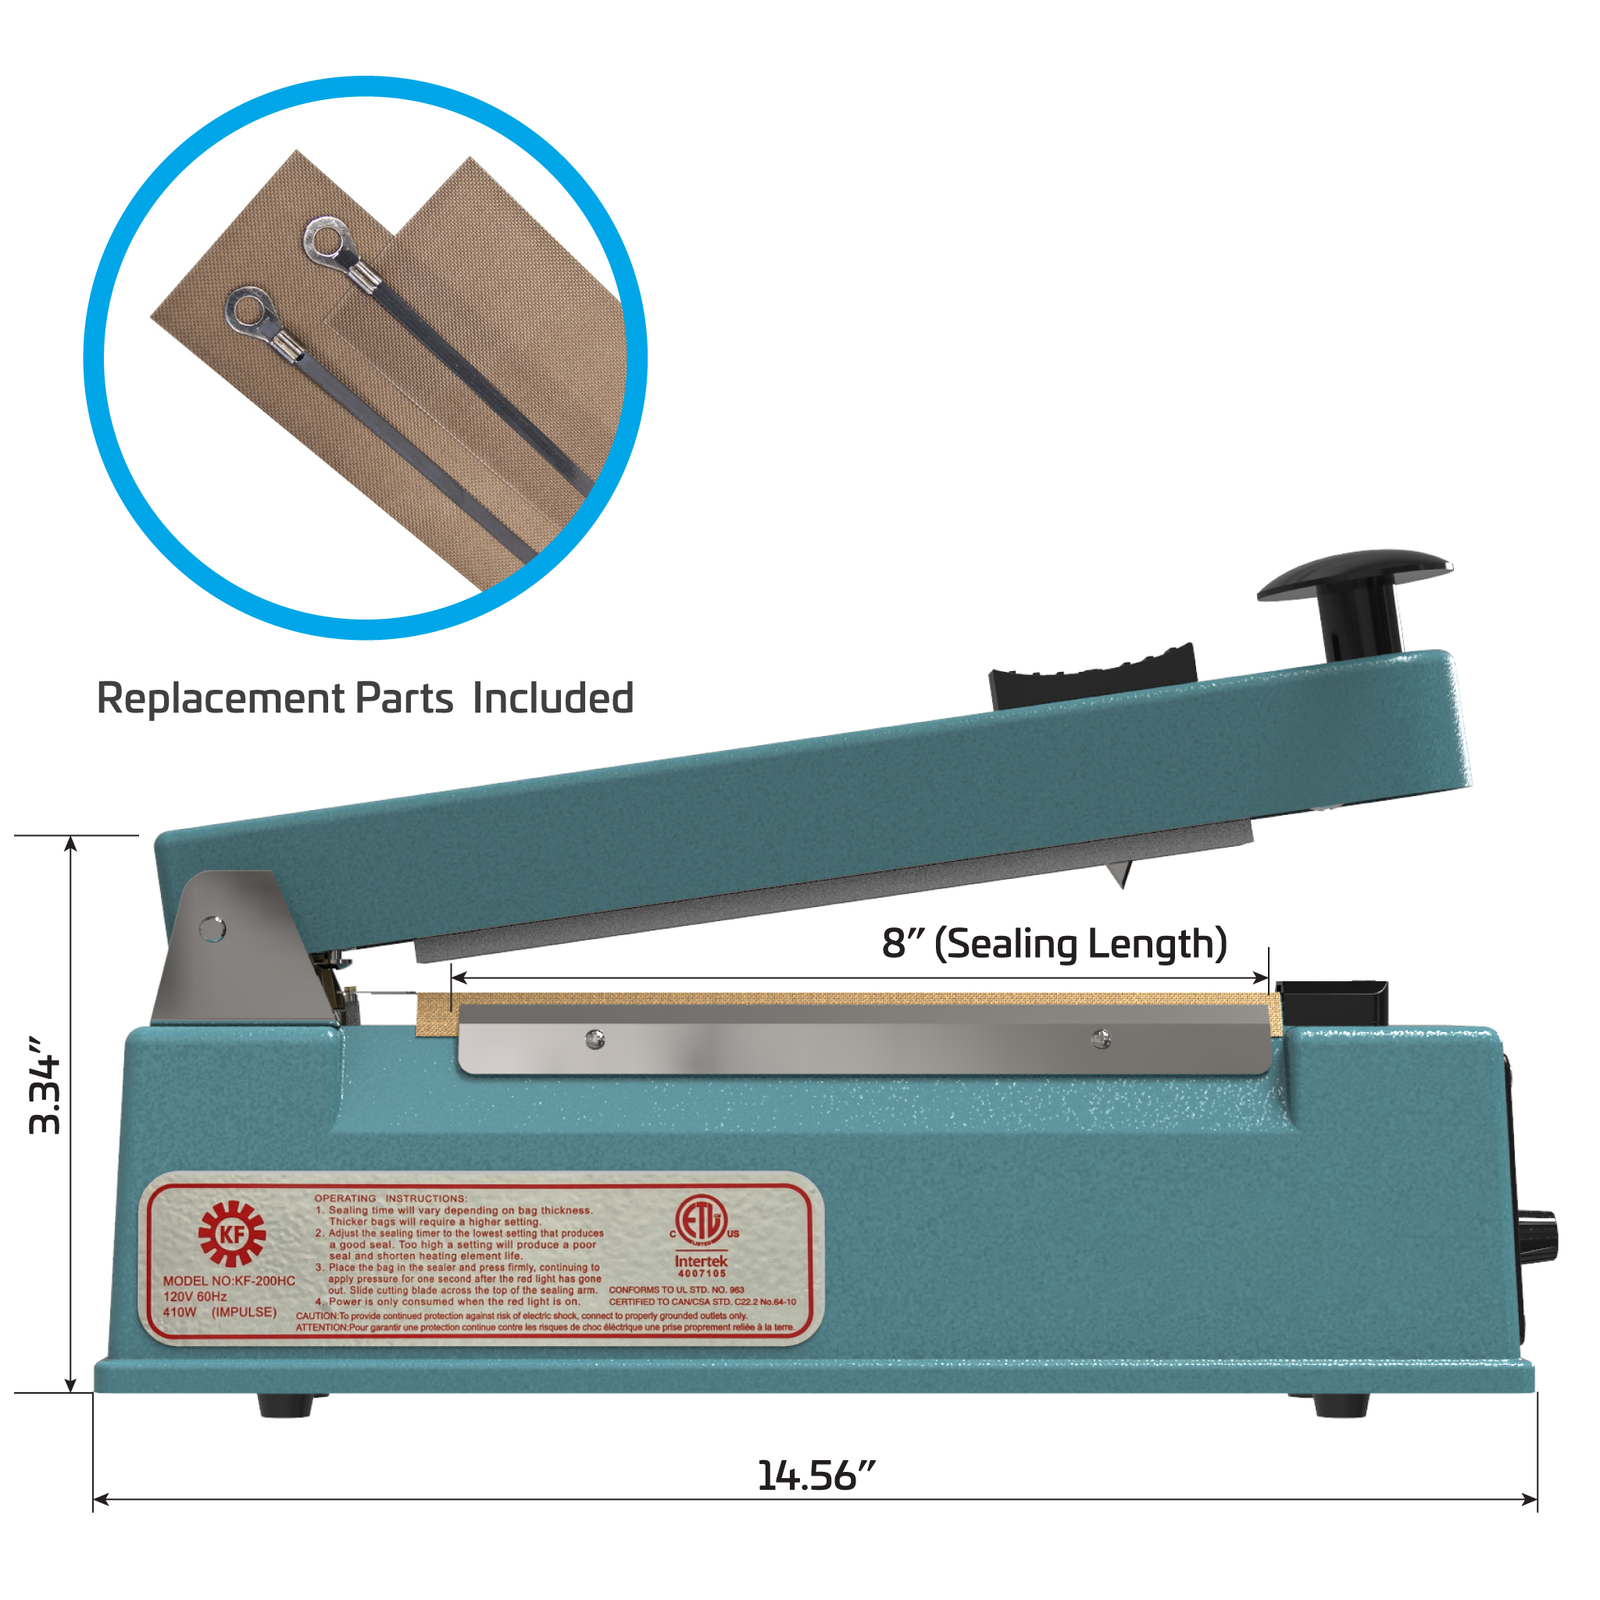 Blue portable manual impulse bag sealer with machine measurements. Feature reads 